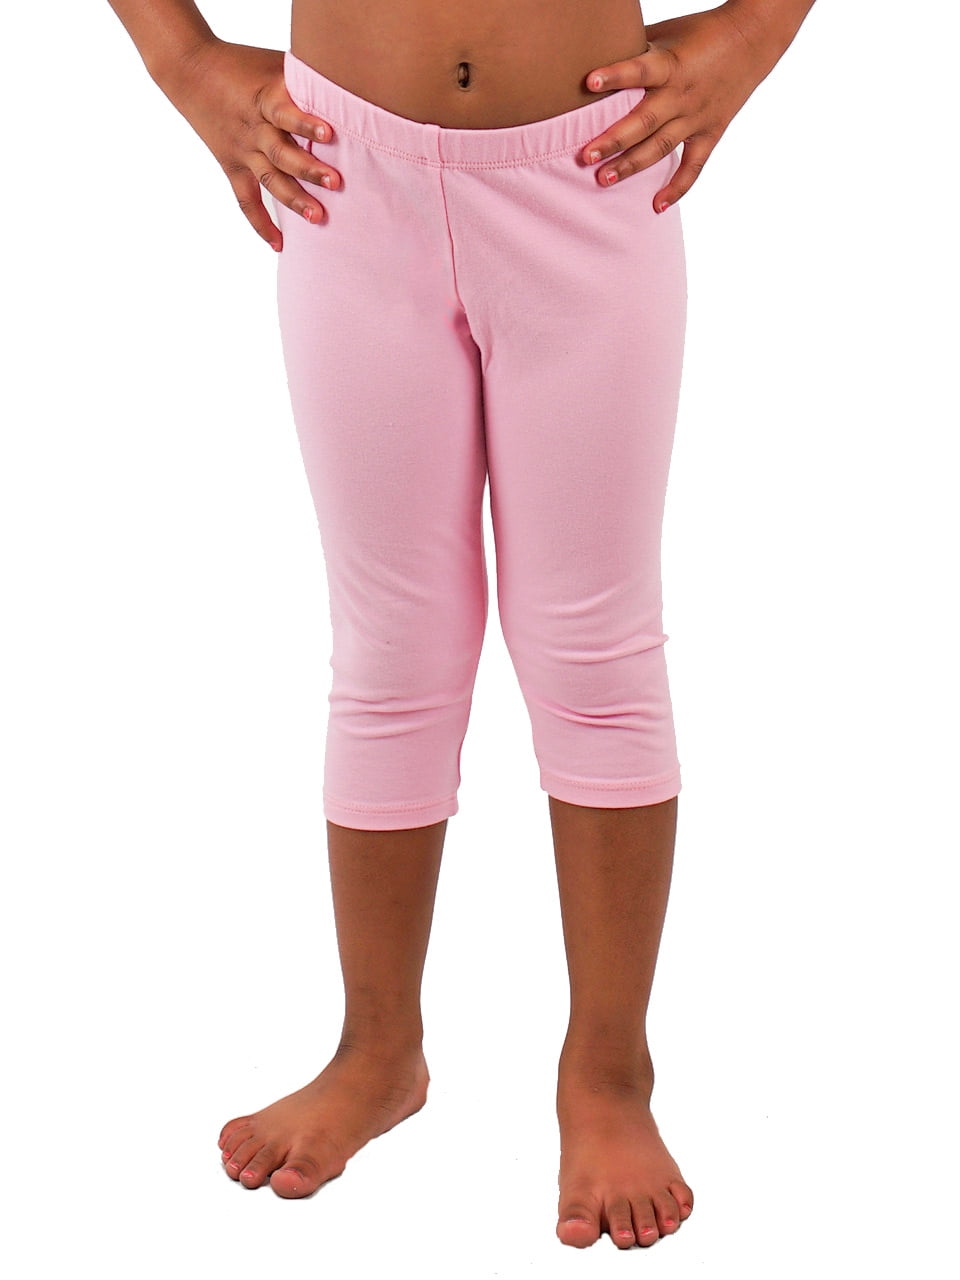 Vivian's Fashions Capri Leggings - Girls, Cotton (Pink, Large